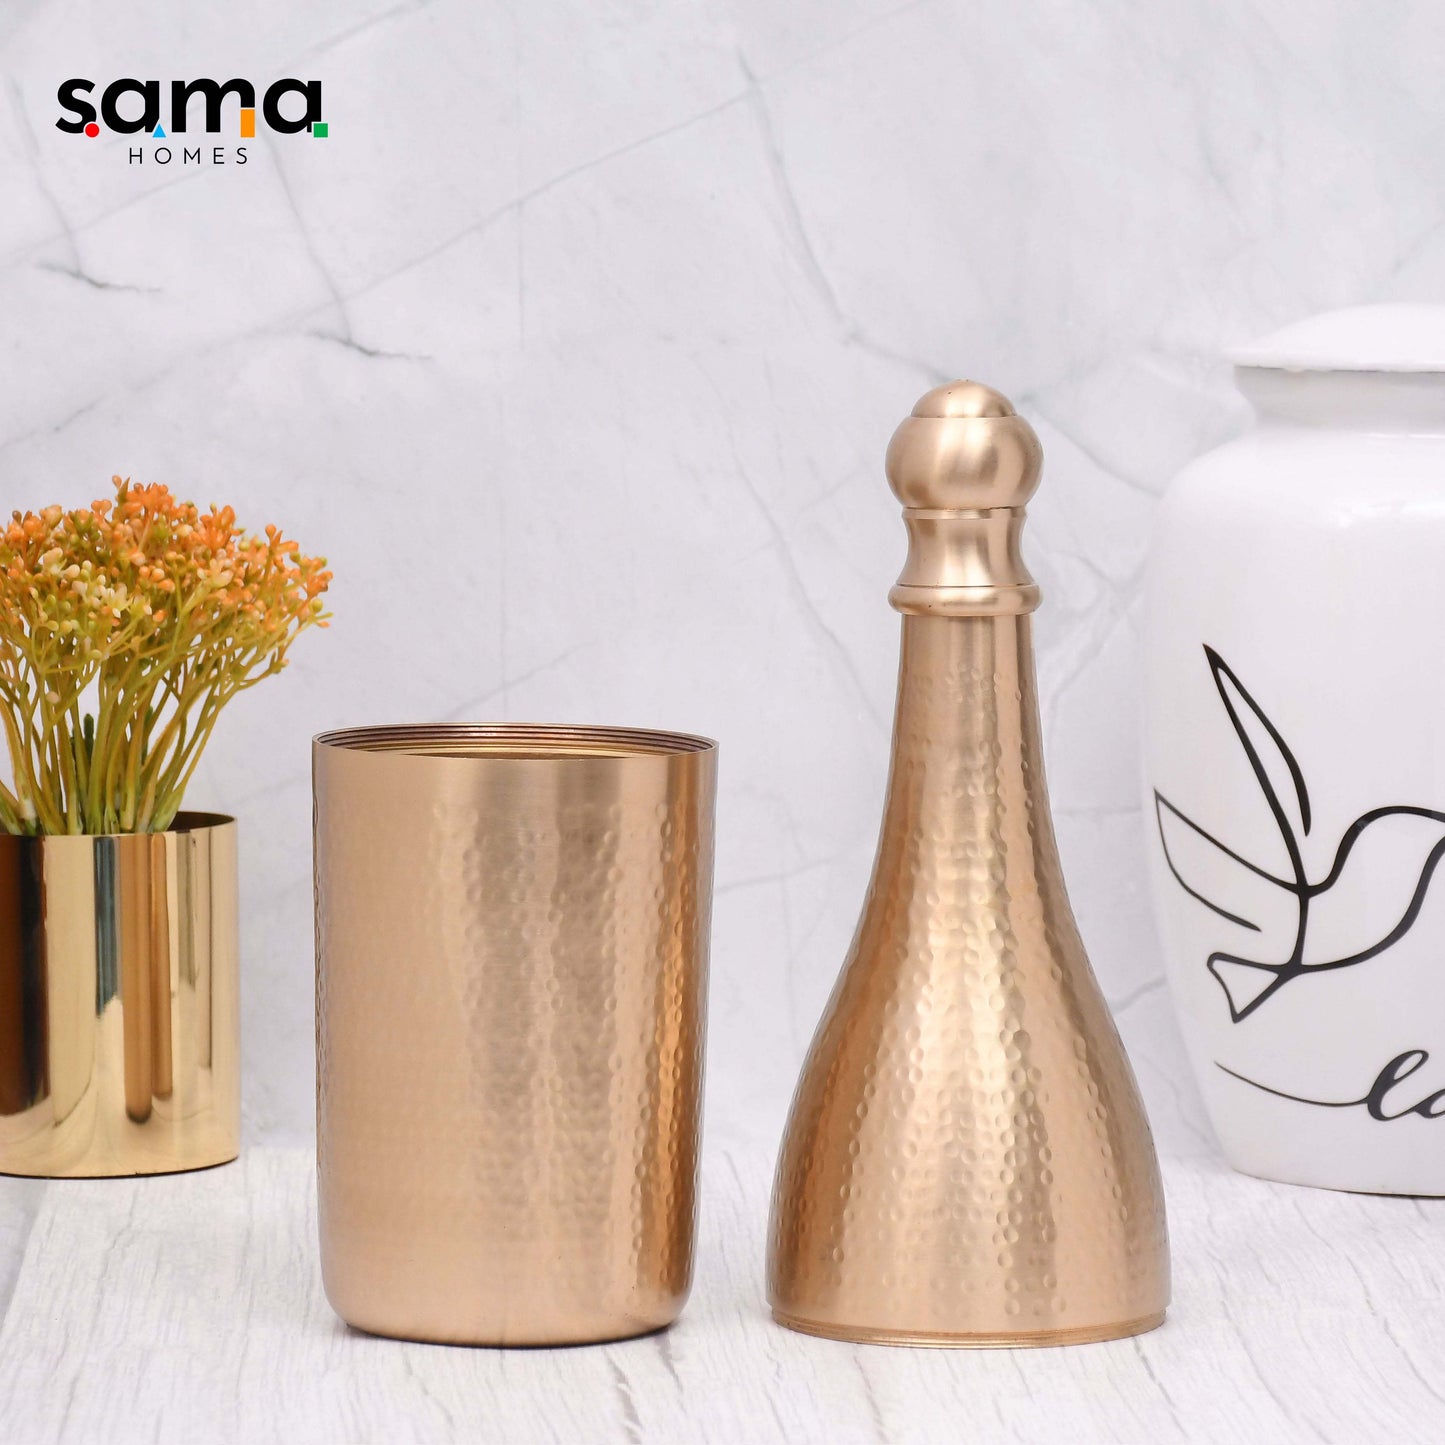 SAMA Homes - beautifullly designed brass matt finished champagne bottle case with elegant design